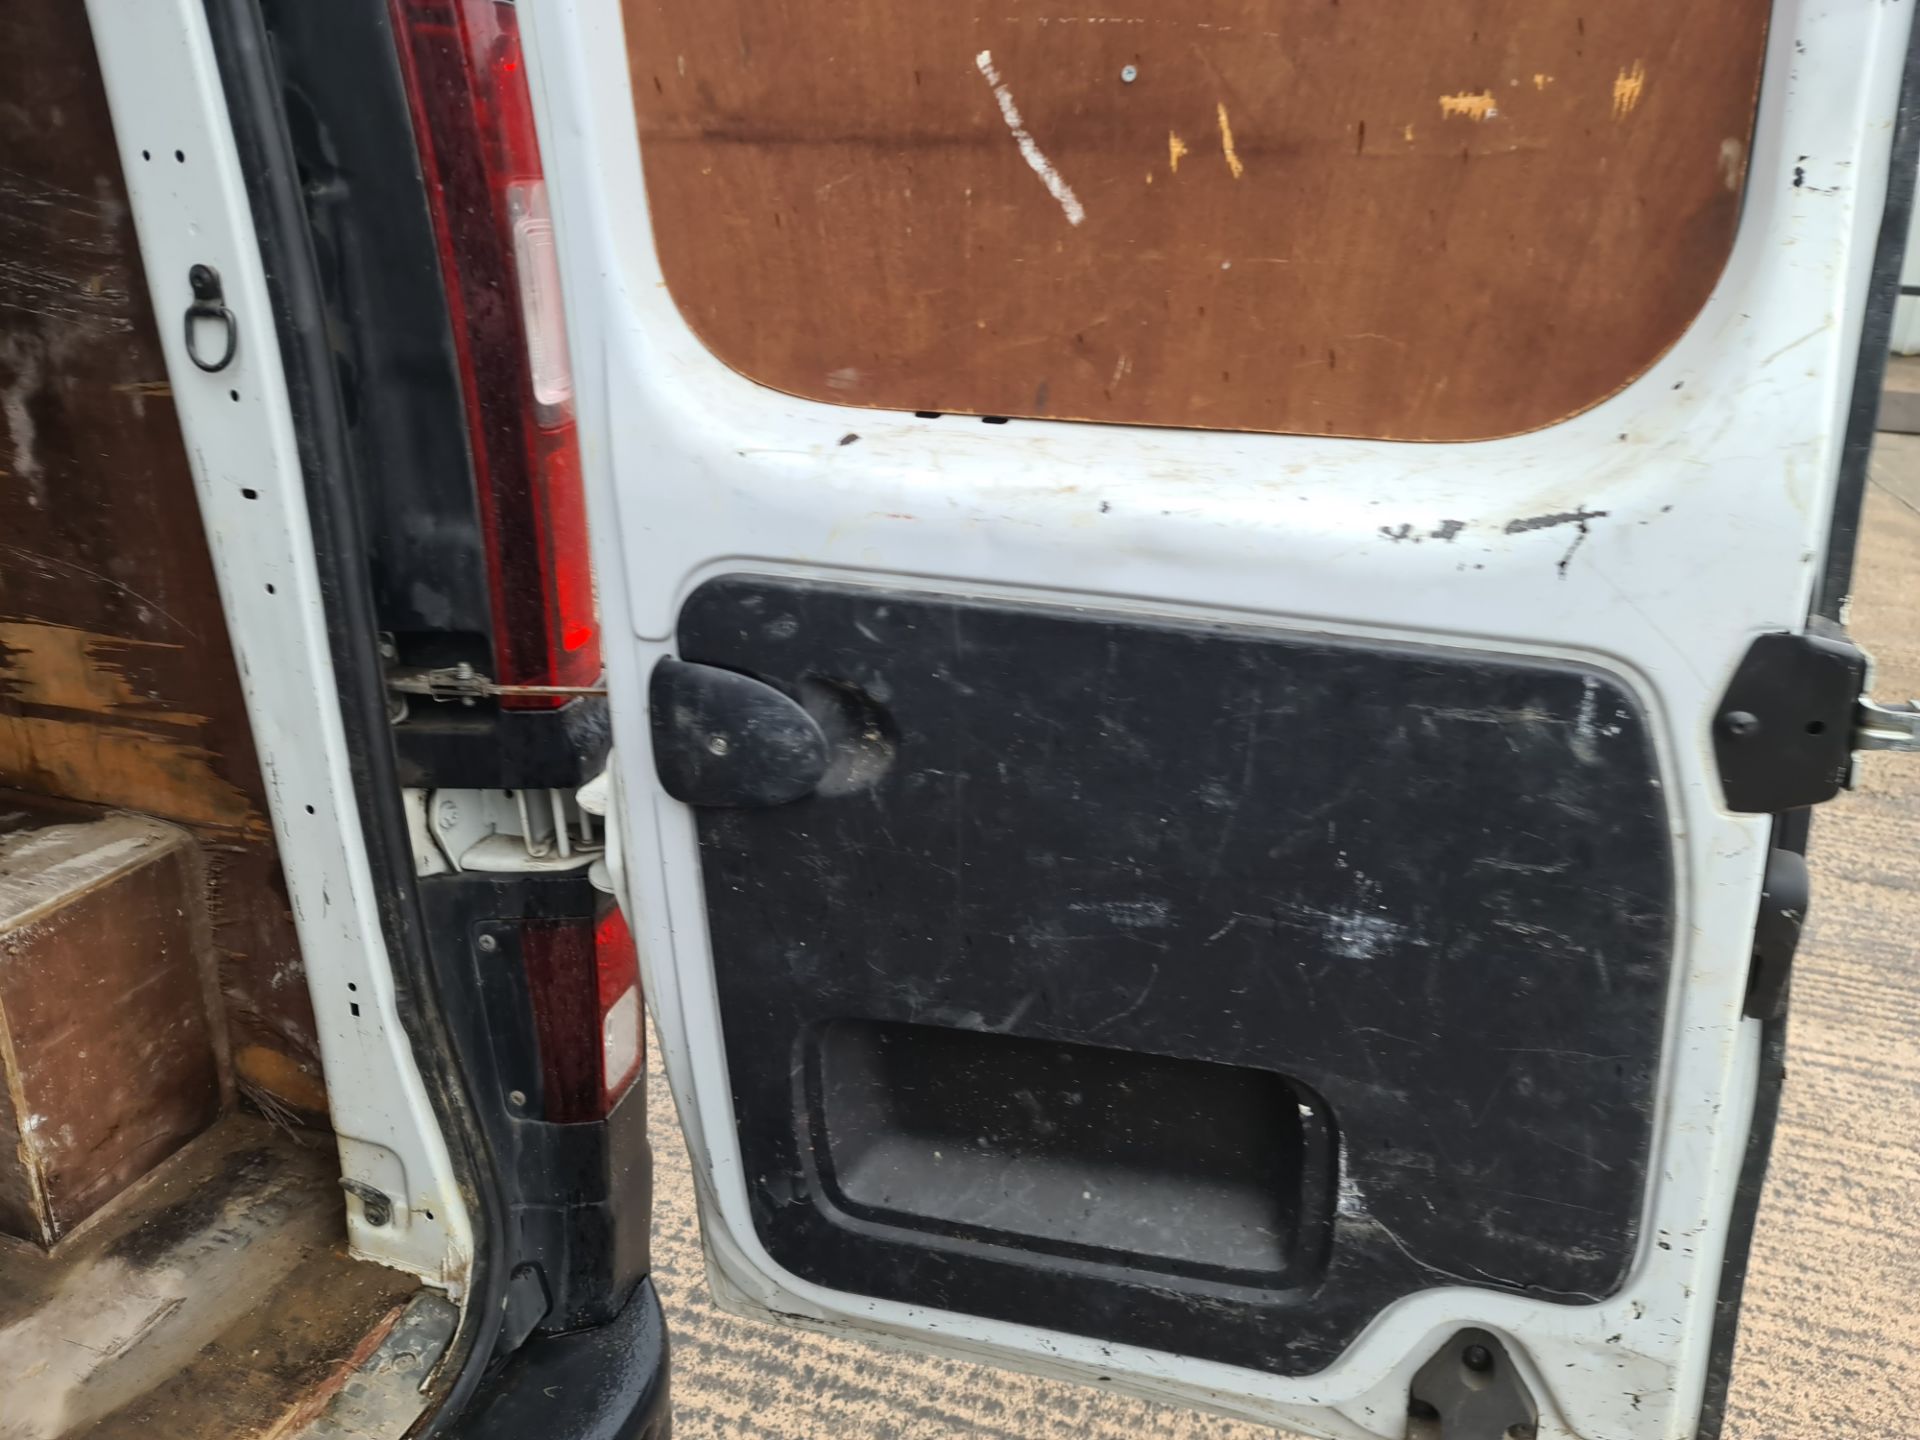 2015 Vauxhall Vivaro 2900 CDTi panel van - Image 33 of 66